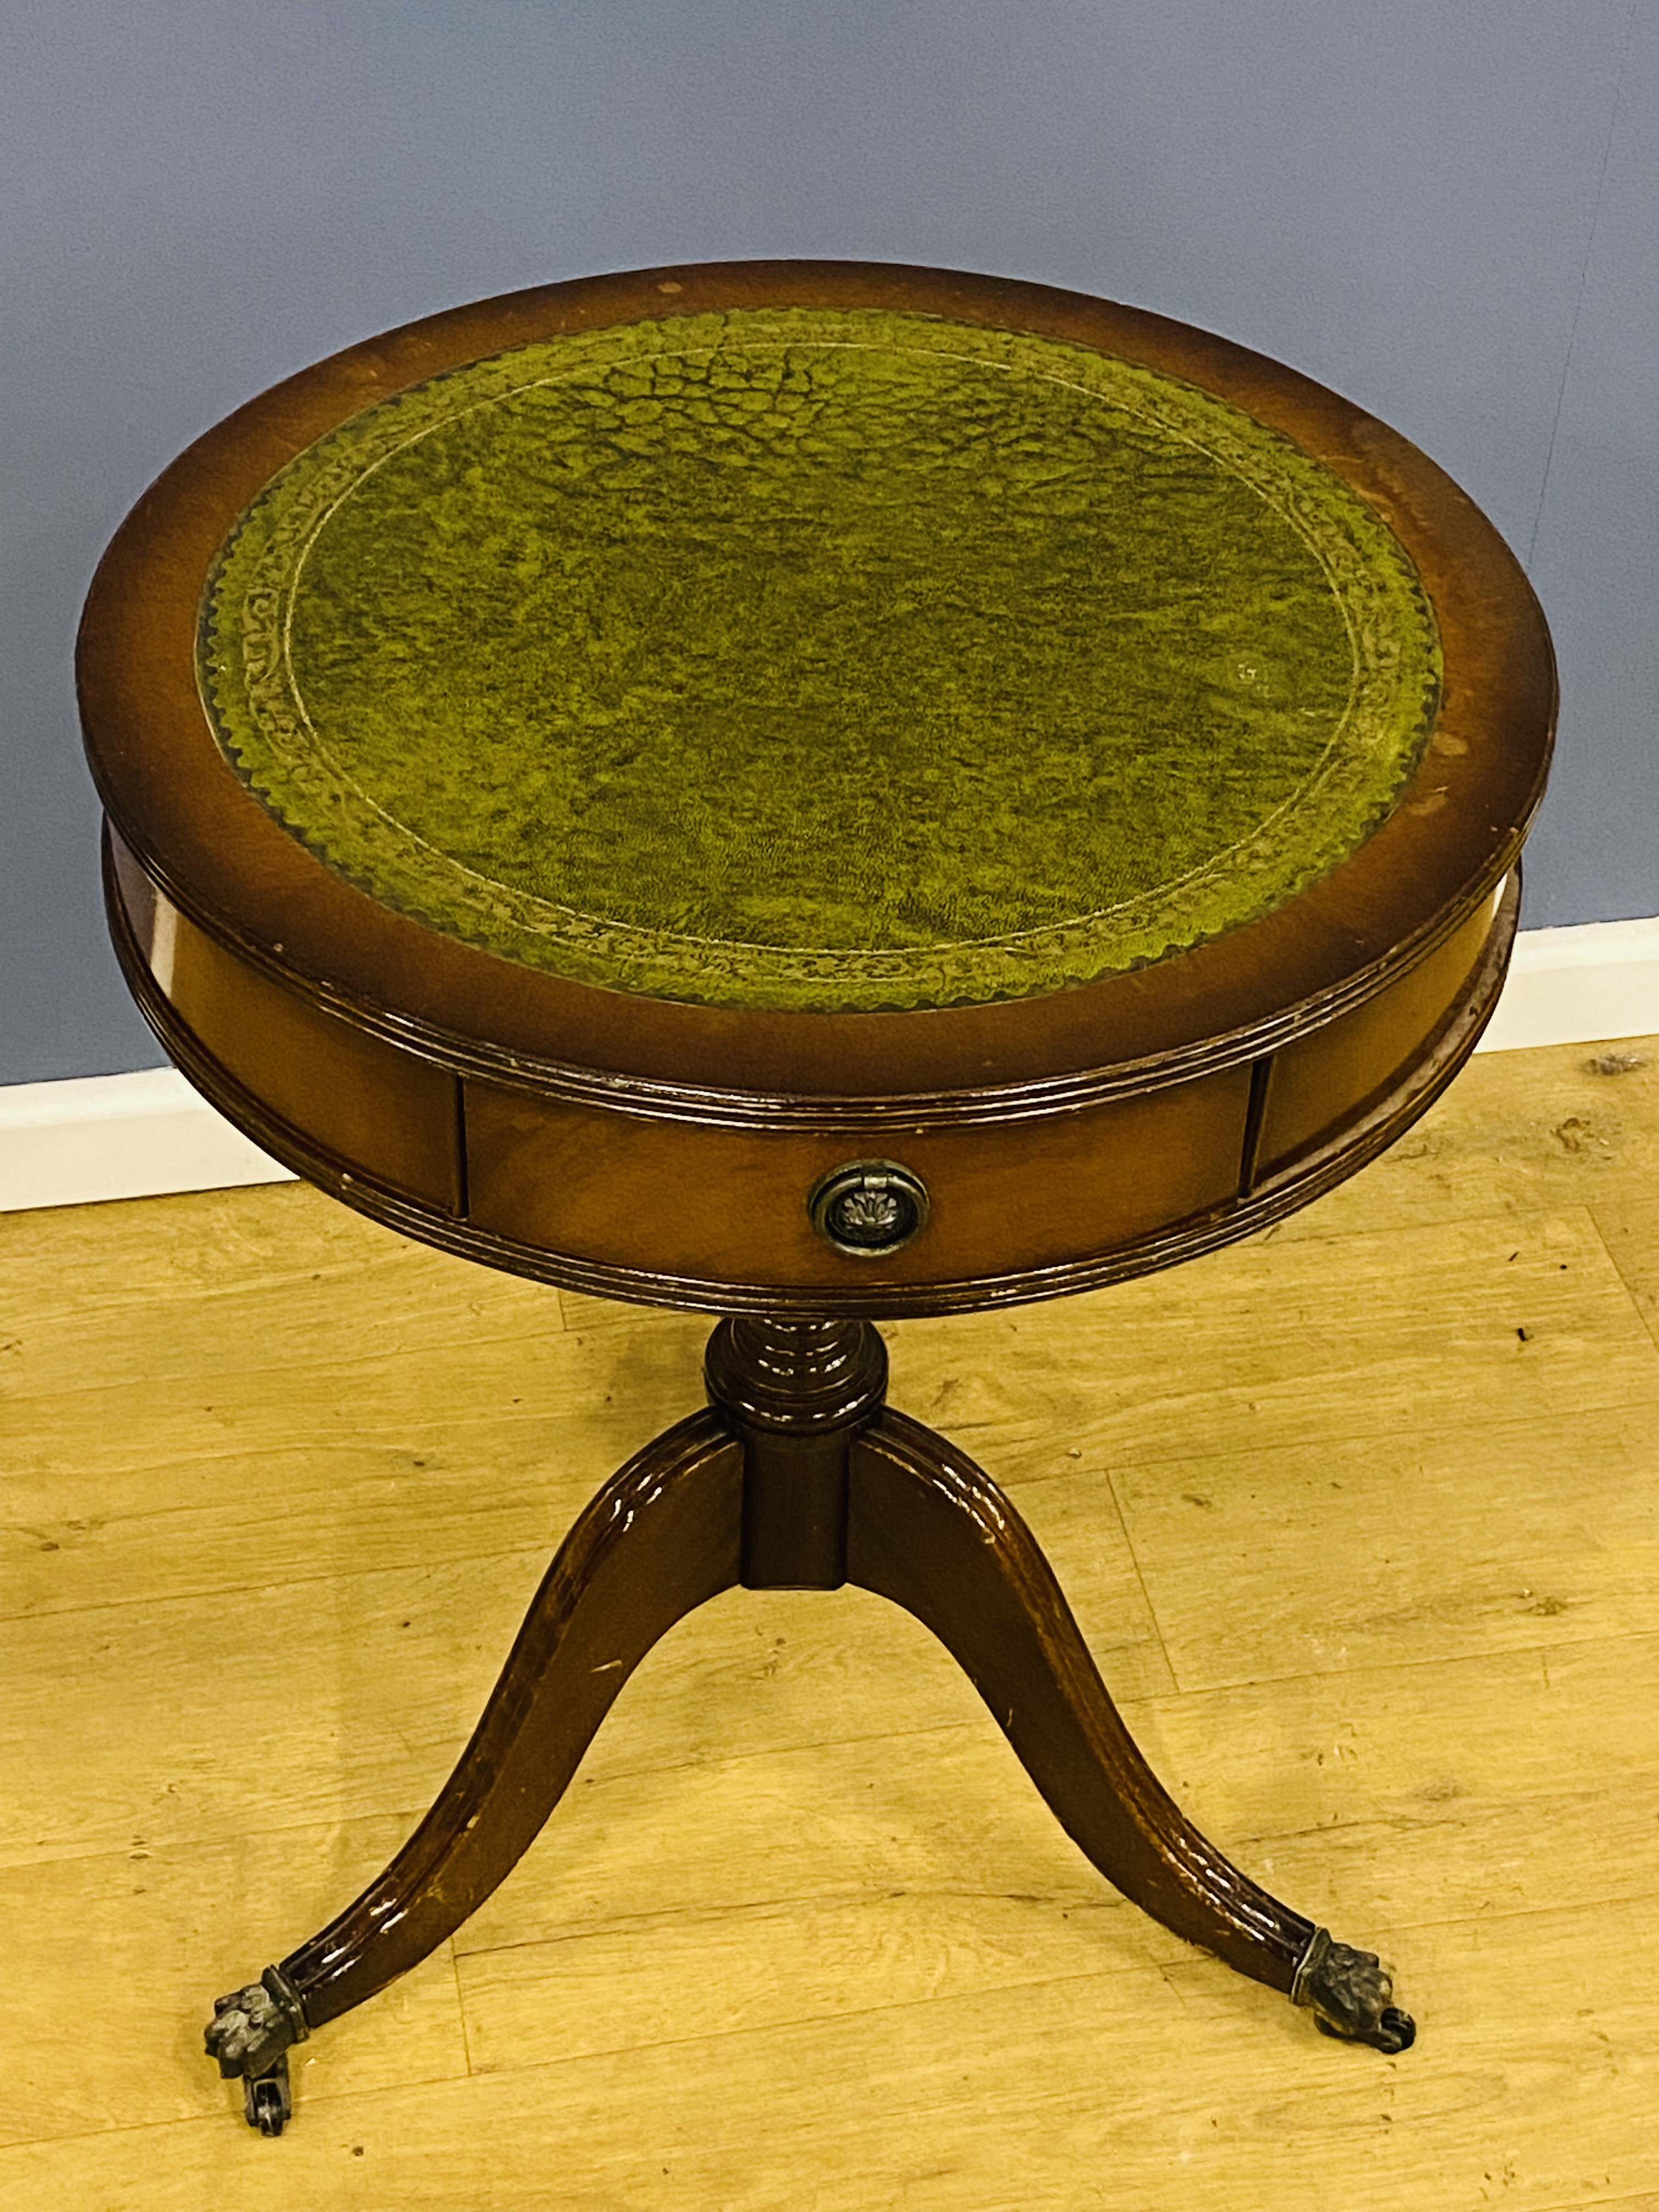 Circular drum table - Image 2 of 5